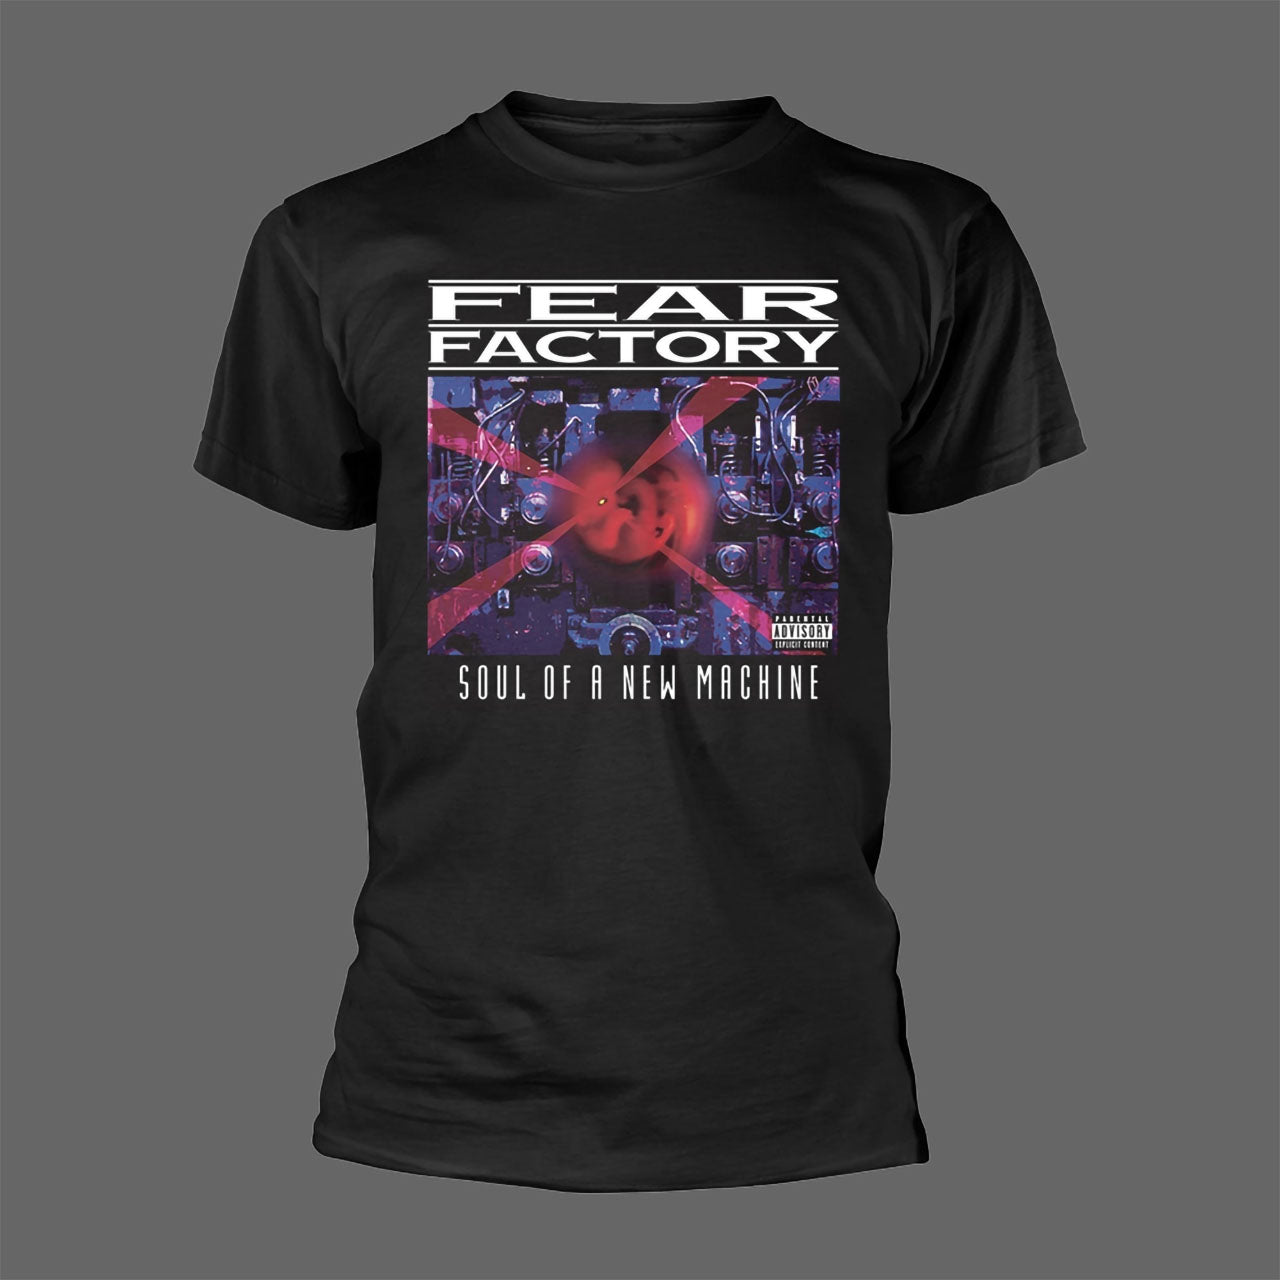 Fear Factory - Soul of a New Machine (T-Shirt)